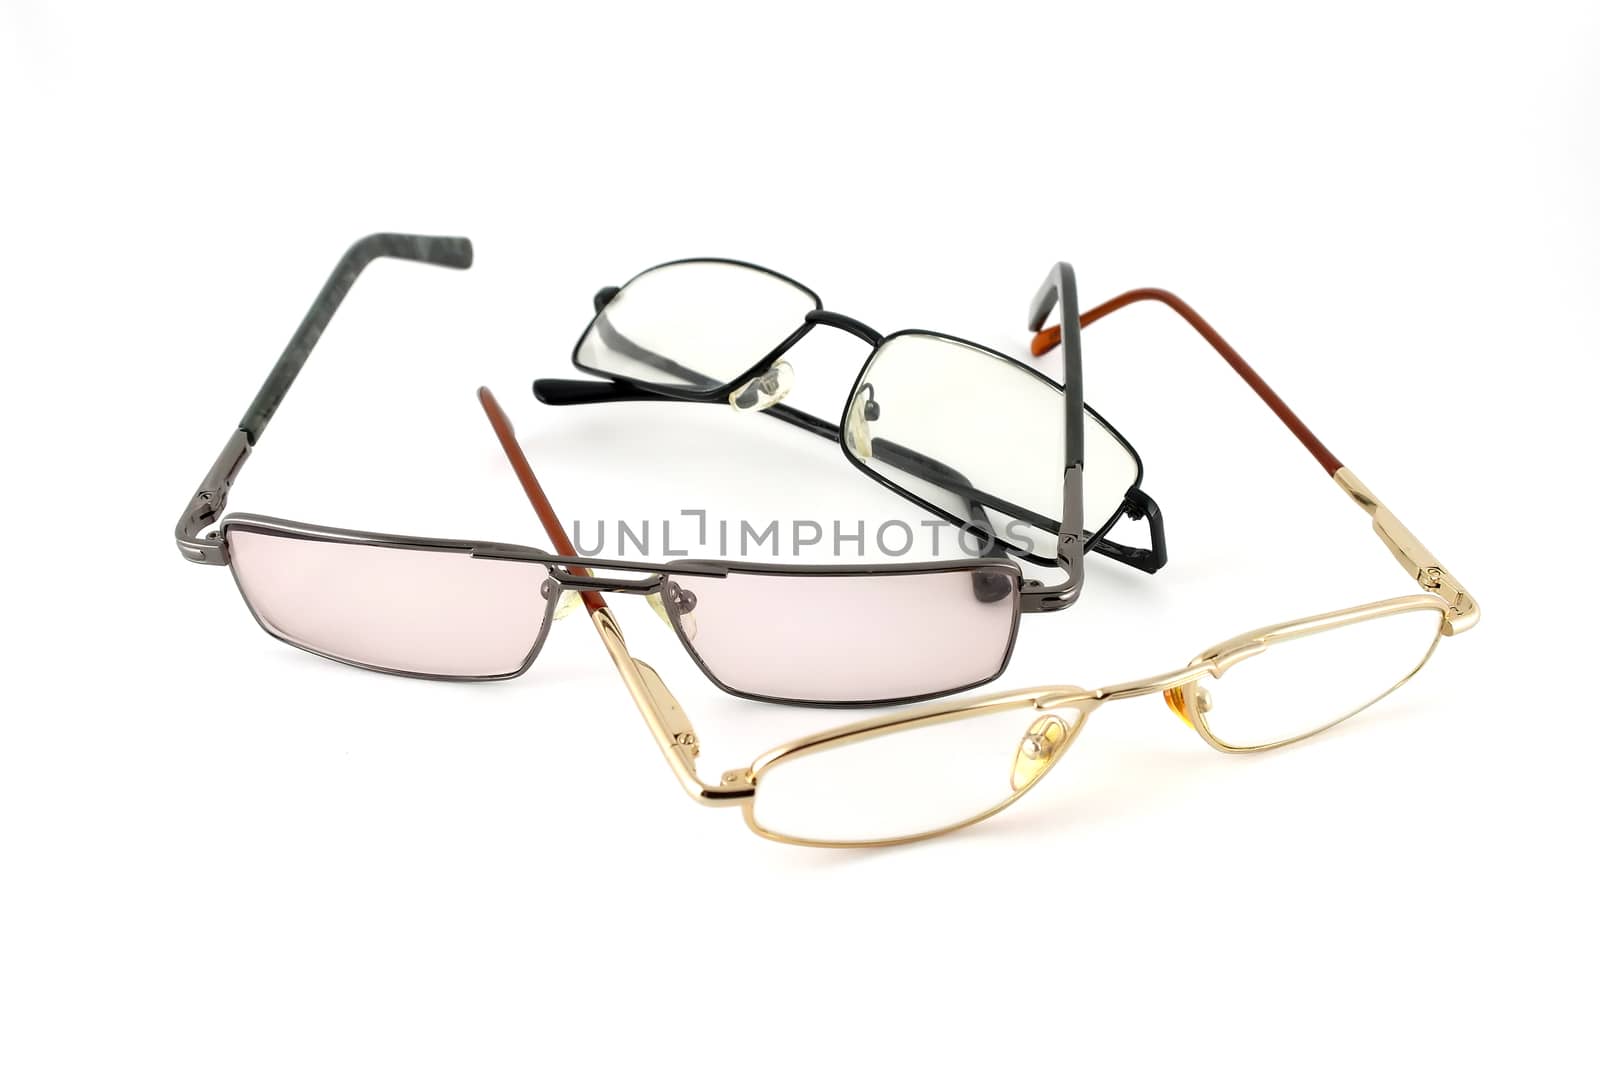 Three optical glasses by sergpet